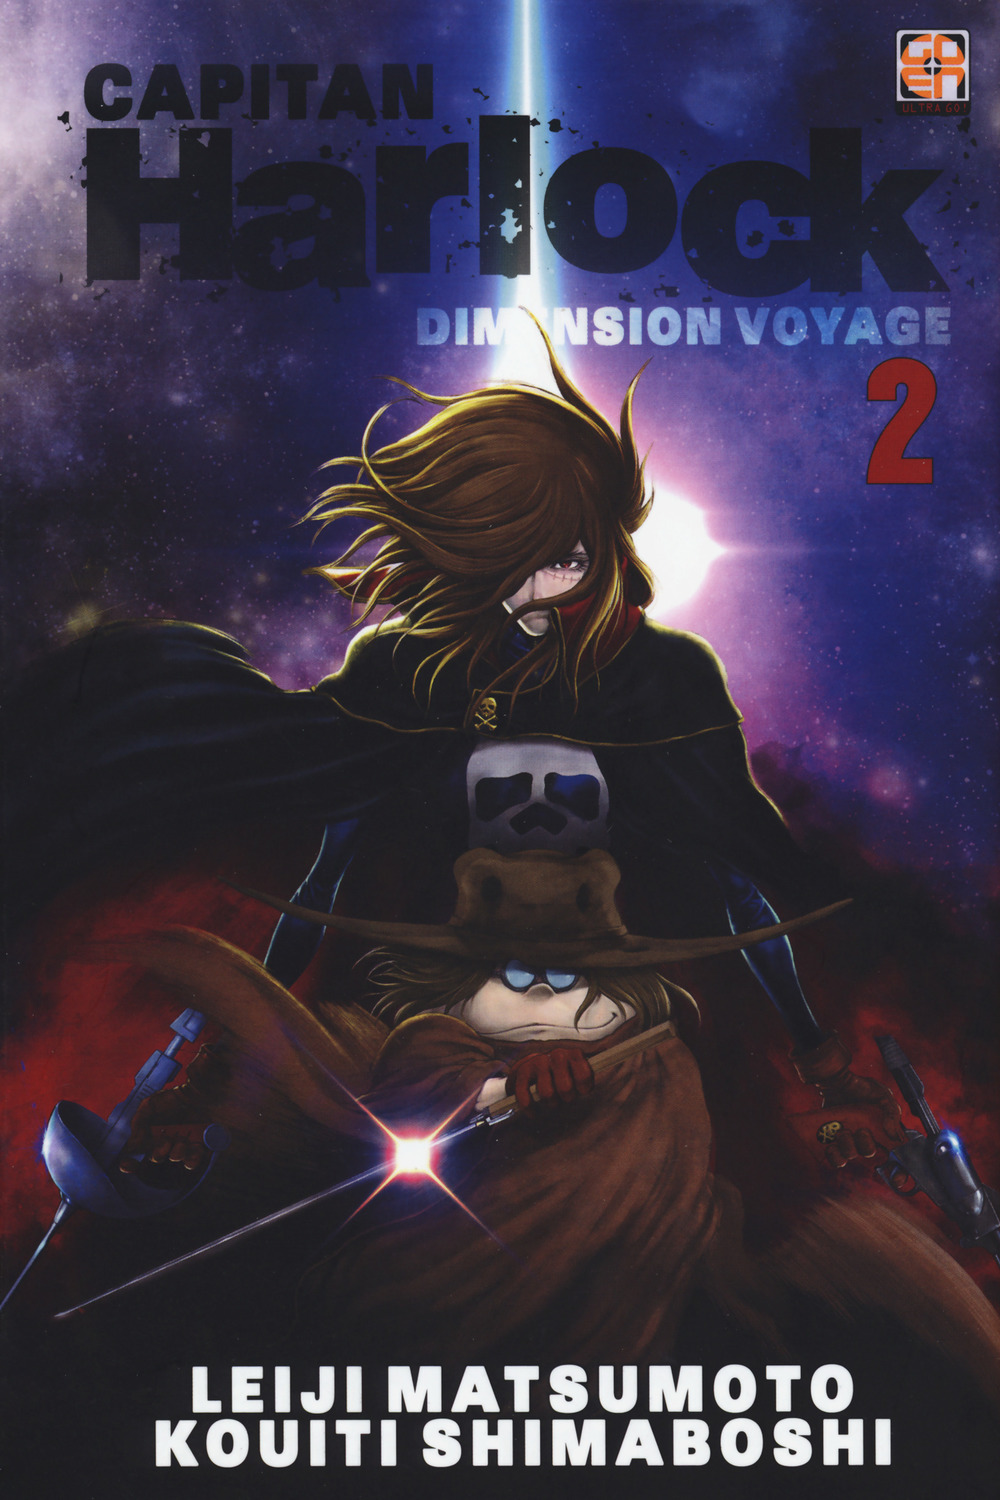 Dimension voyage. Capitan Harlock. Vol. 2